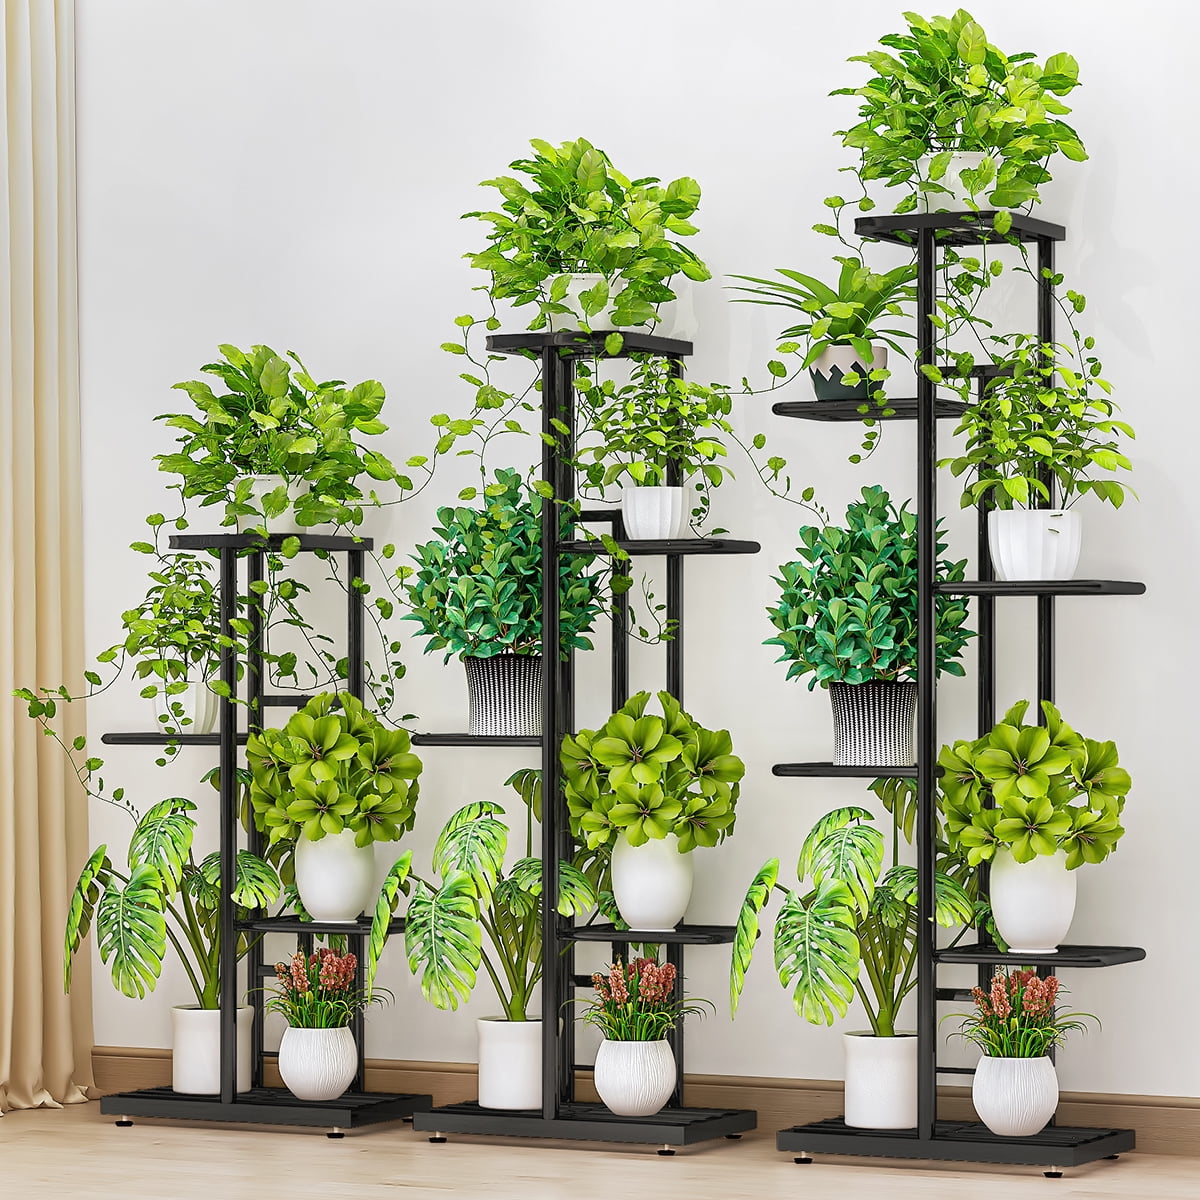 6 Tier Steel Plant Stand Flower Pot Holder Shelf Home Garden Patio Balcony Rack